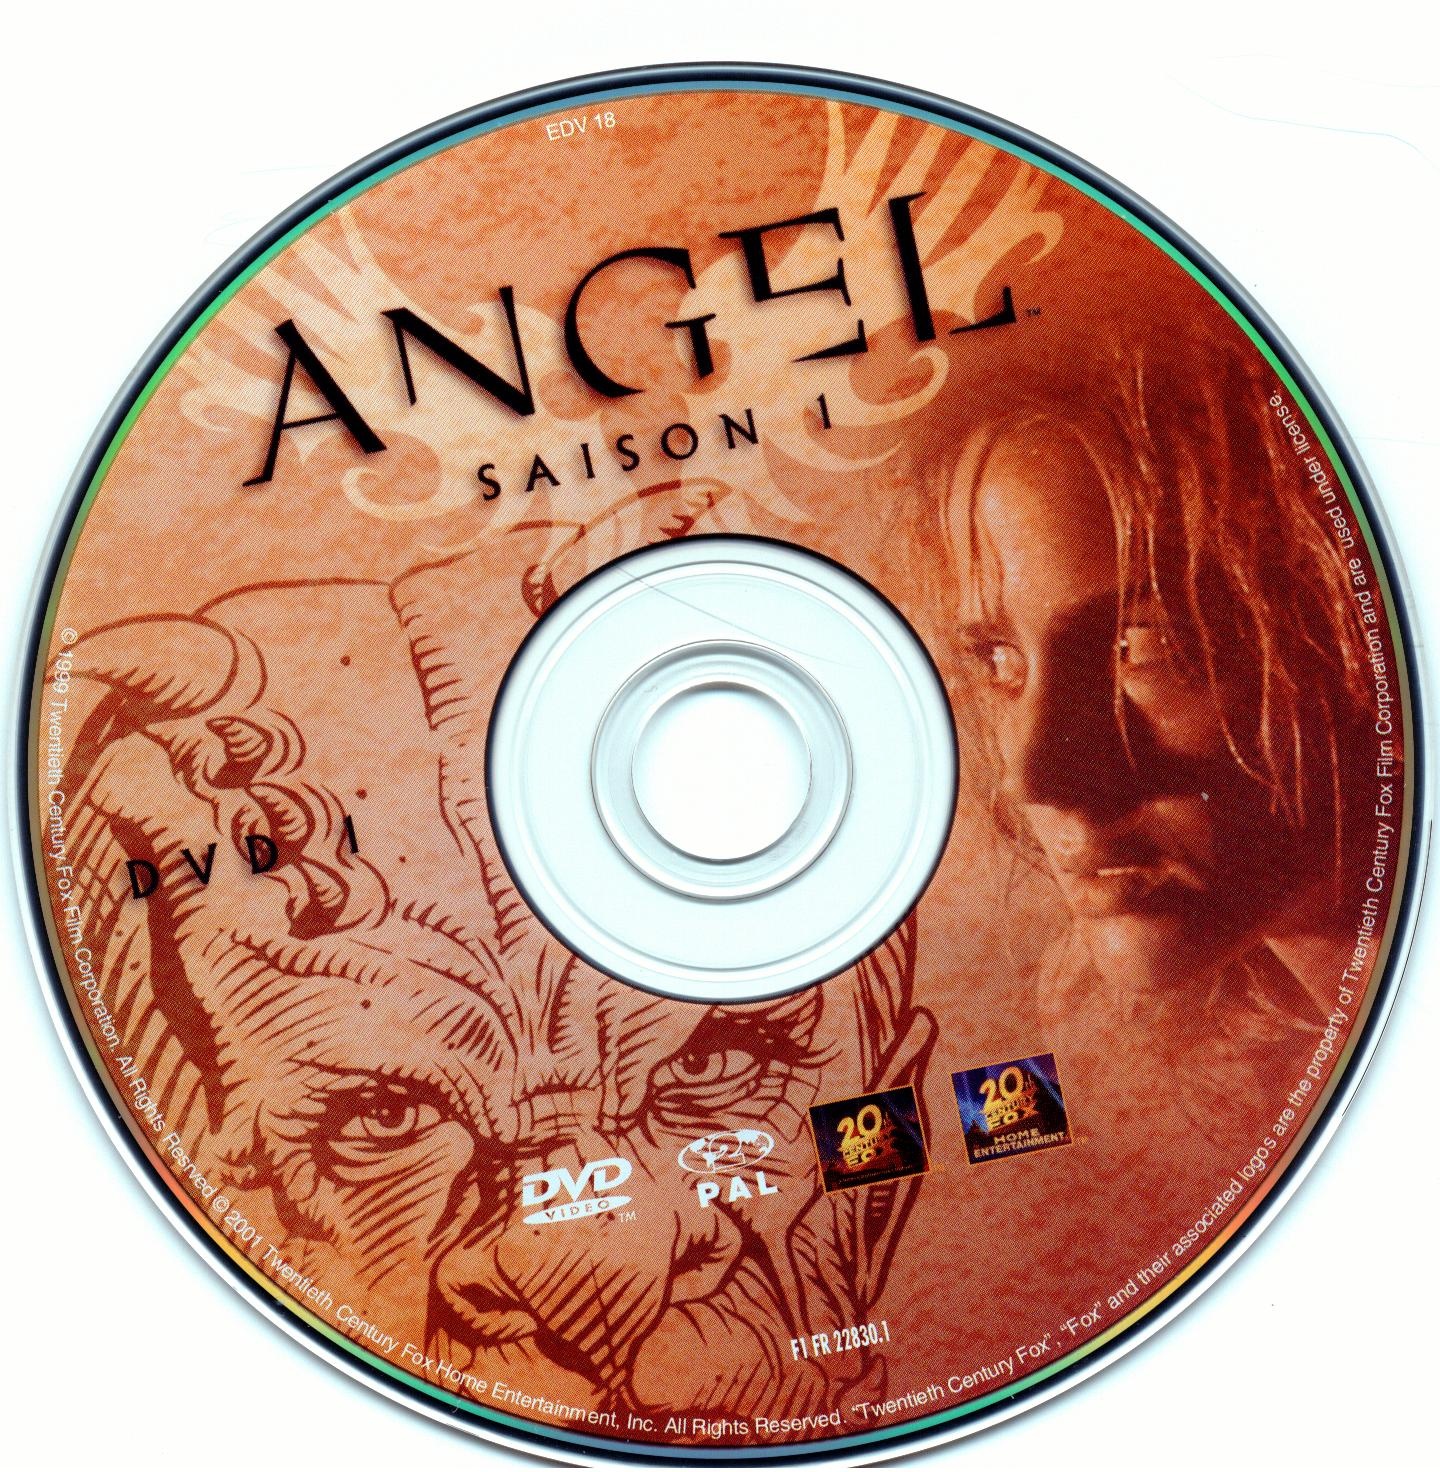 Angel Saison 1 dvd 1